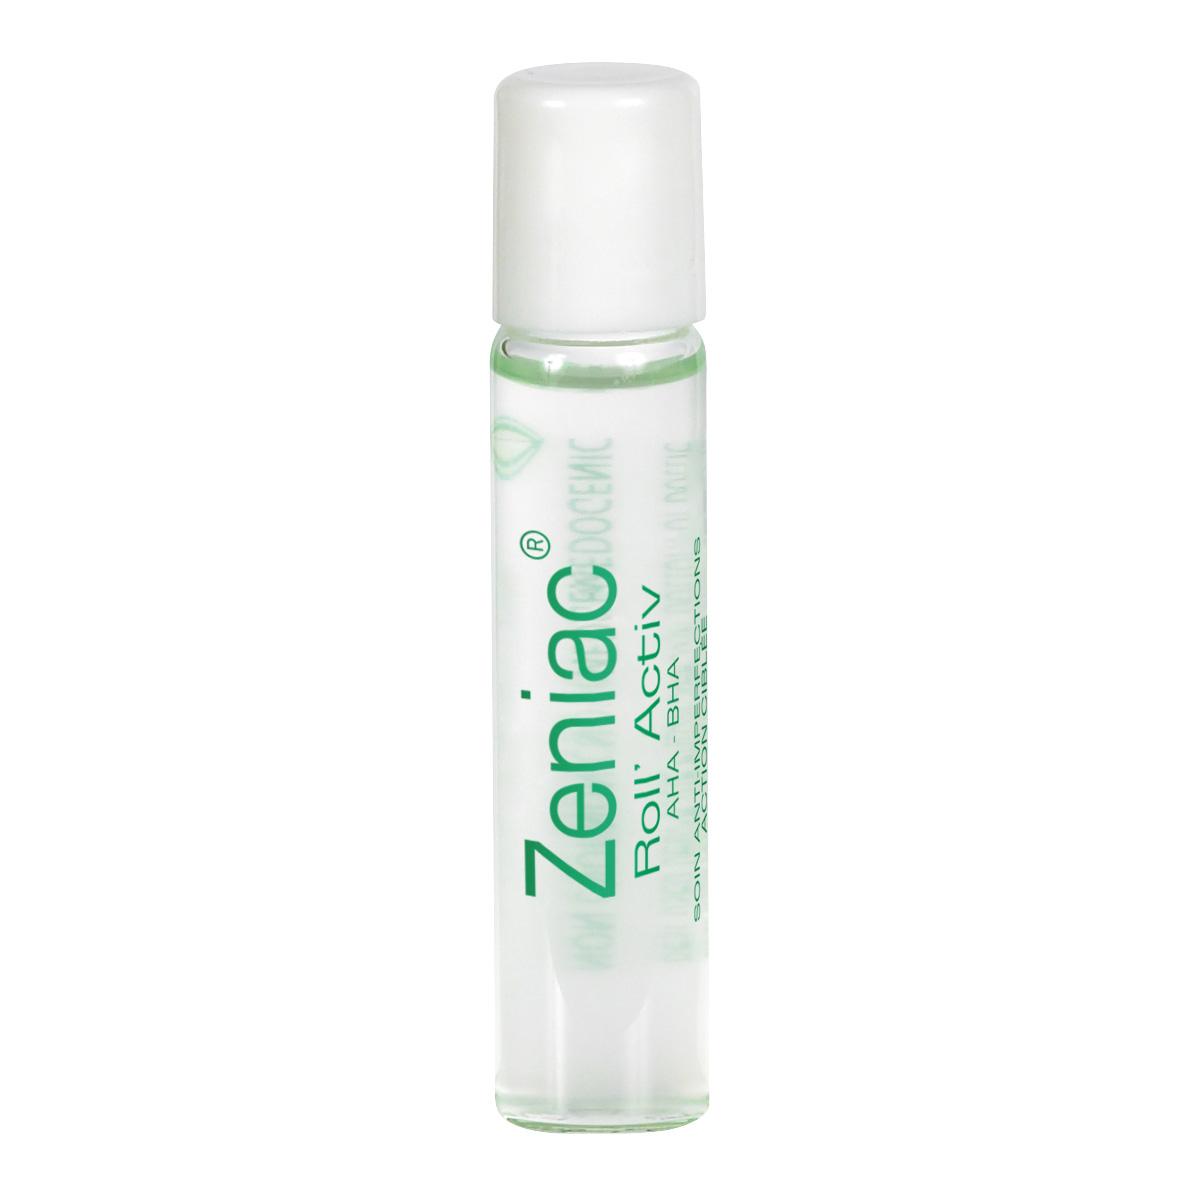 Zeniac ROLL ACTIV  - رل اکتیو زنیاک